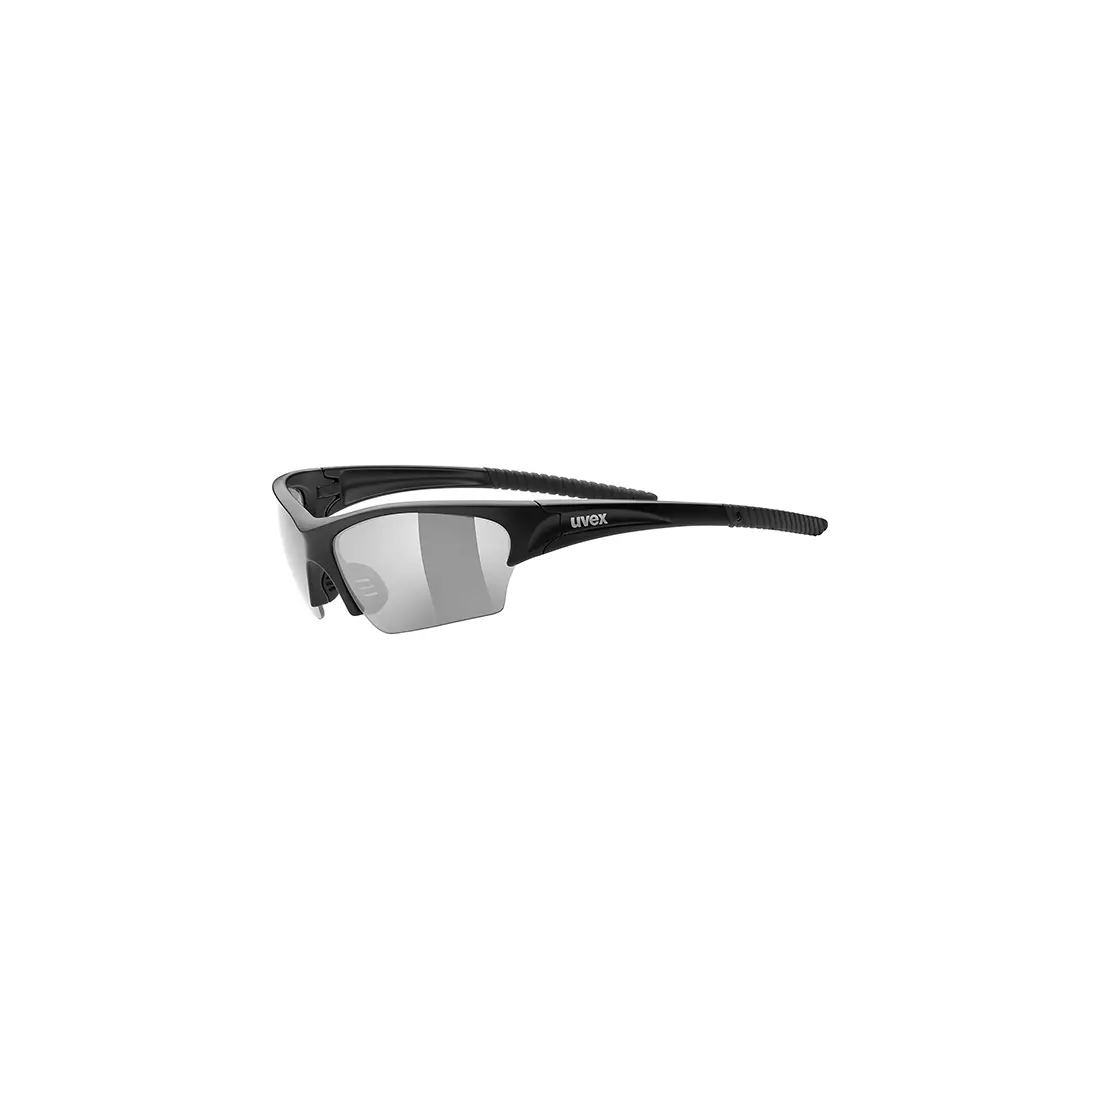 Bike / sport glasses Uvex Sunsation 53/0/606/2210/UNI SS19